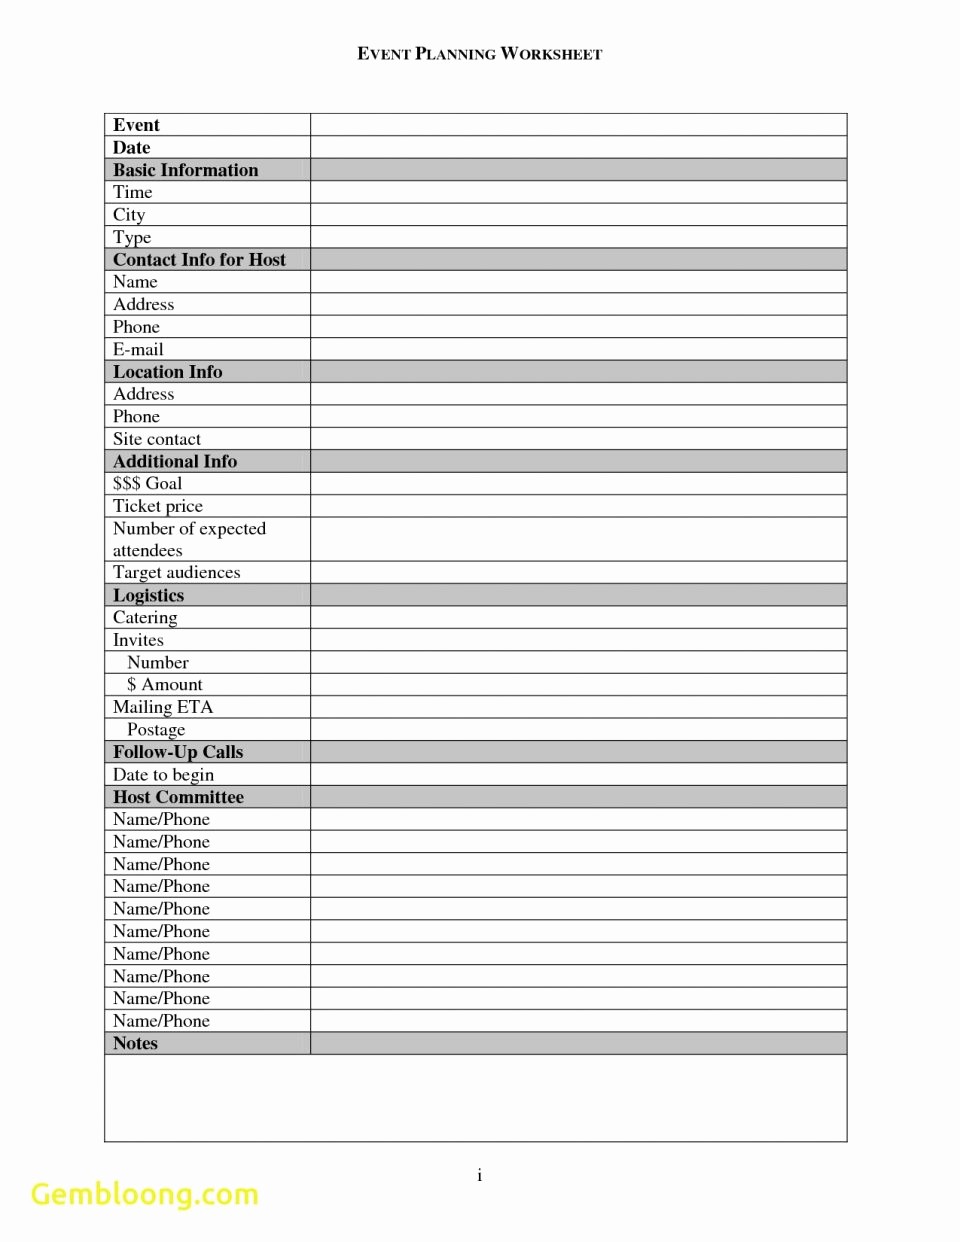 Event Planning Timeline Template Excel Best Of Bud Worksheet event Planner Free Planning Simple